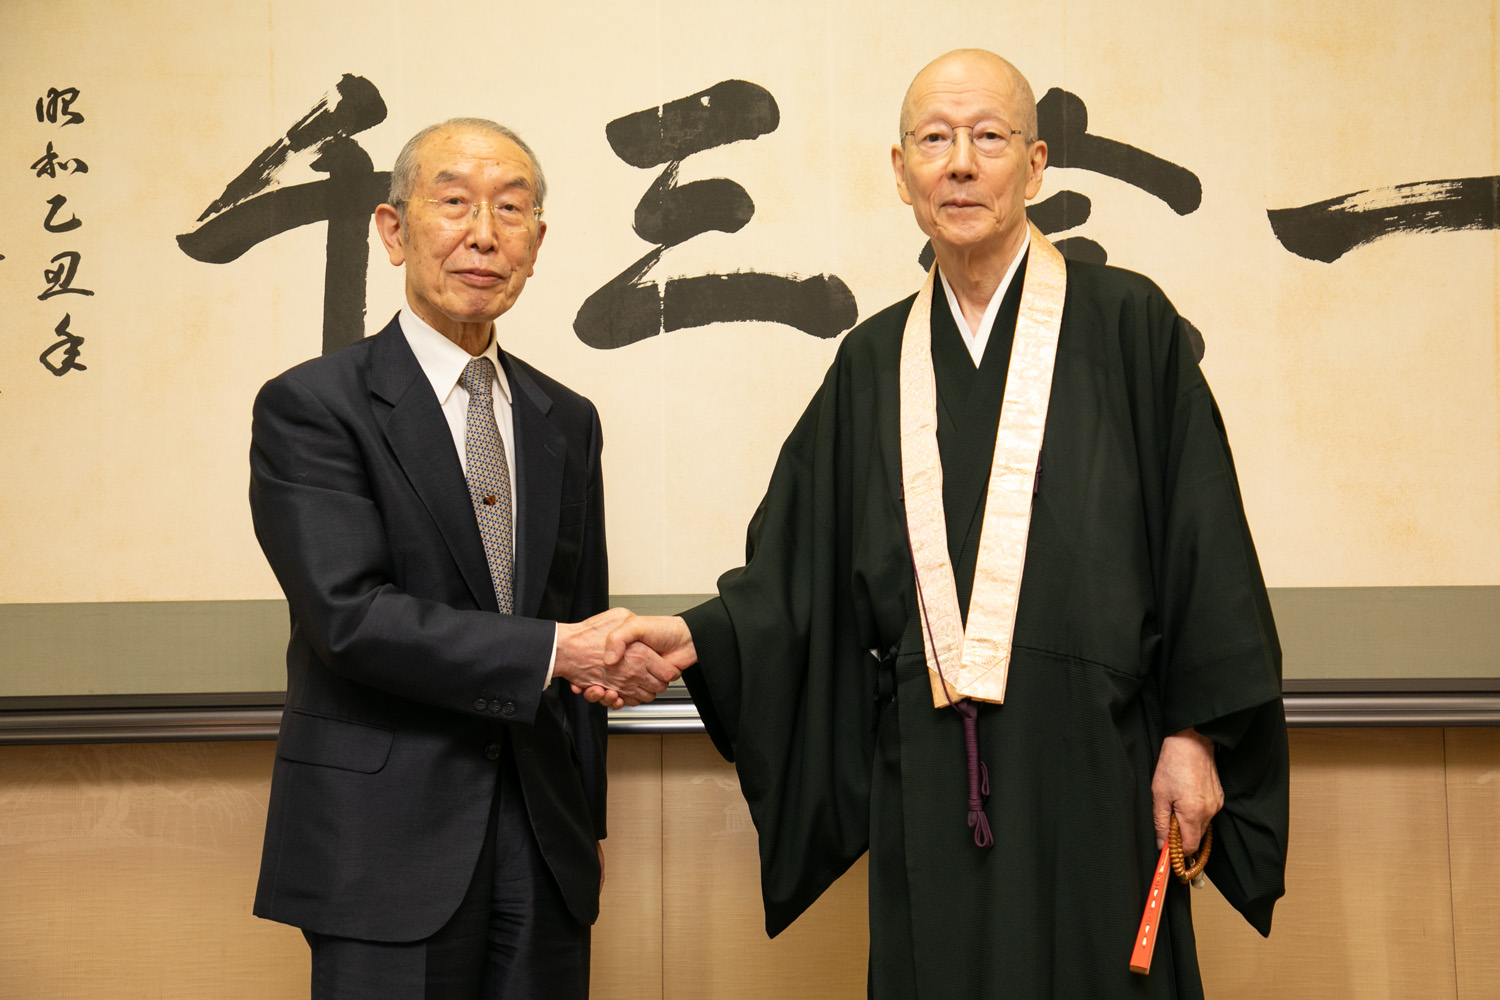 WCRP/RfP Japan Selected Ven. Gijun Sugitani as the New President